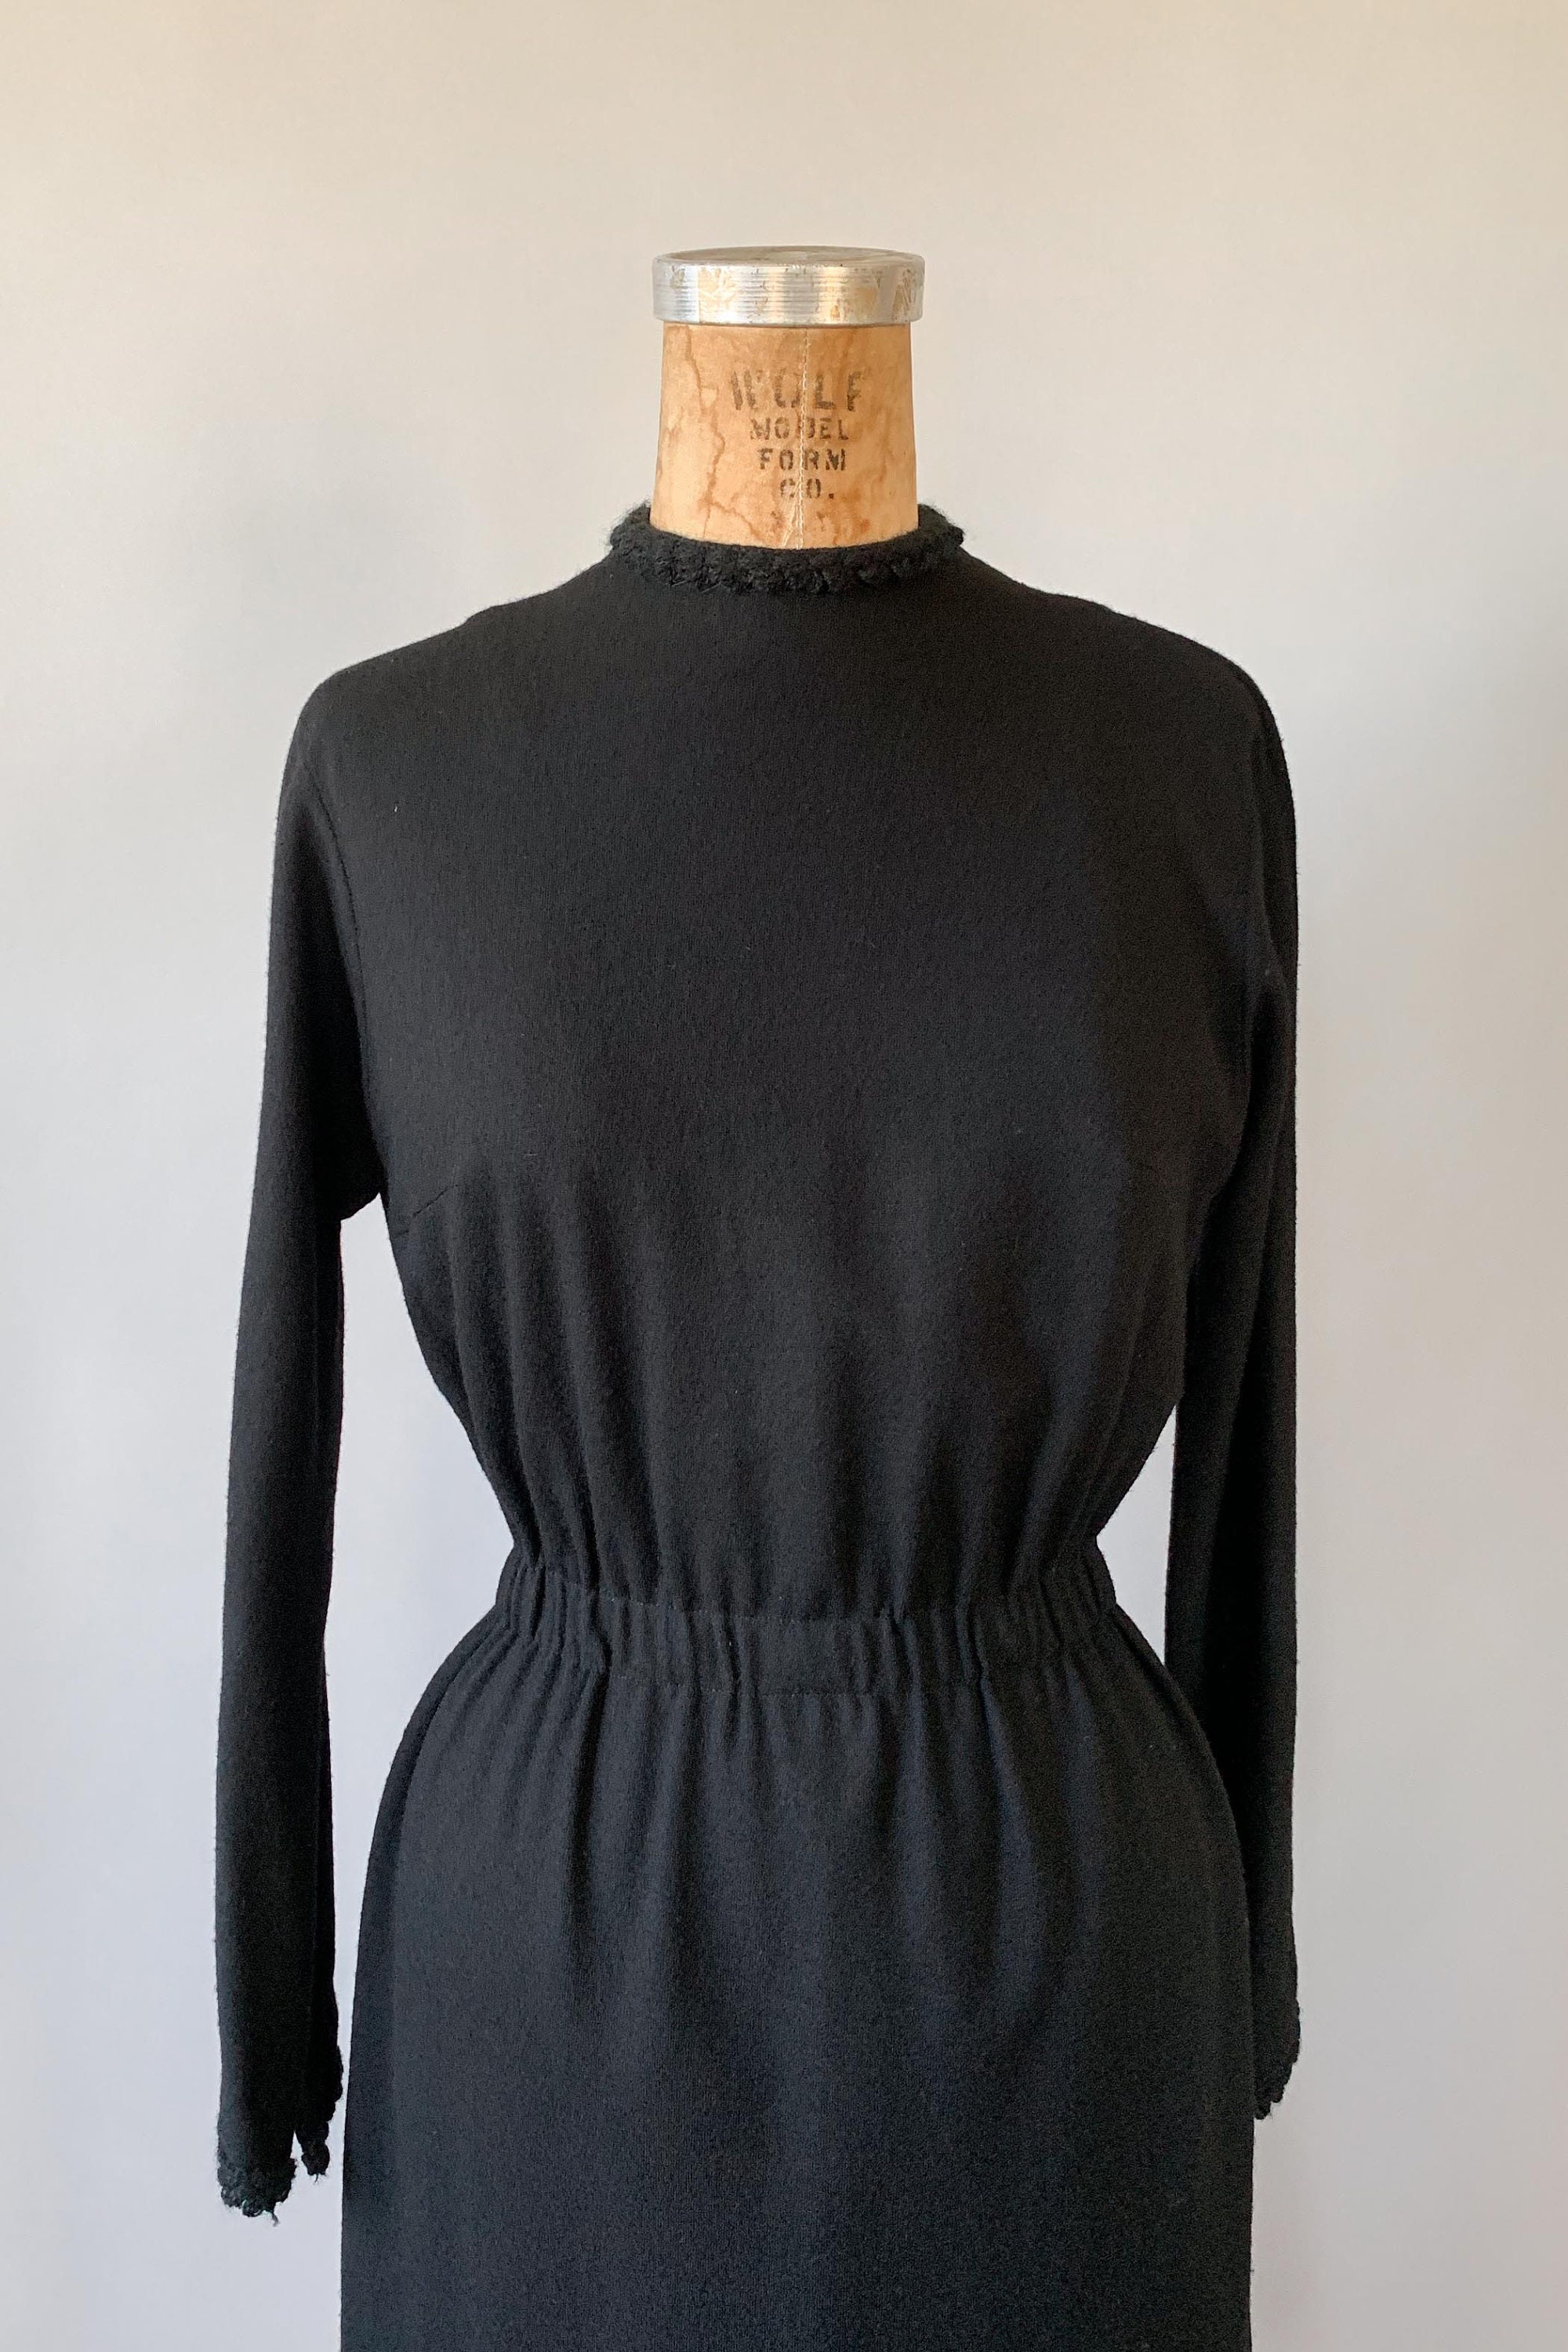 Vintage 1950s 50s 1960s black wool designer Anne Fogarty sheath dress ...